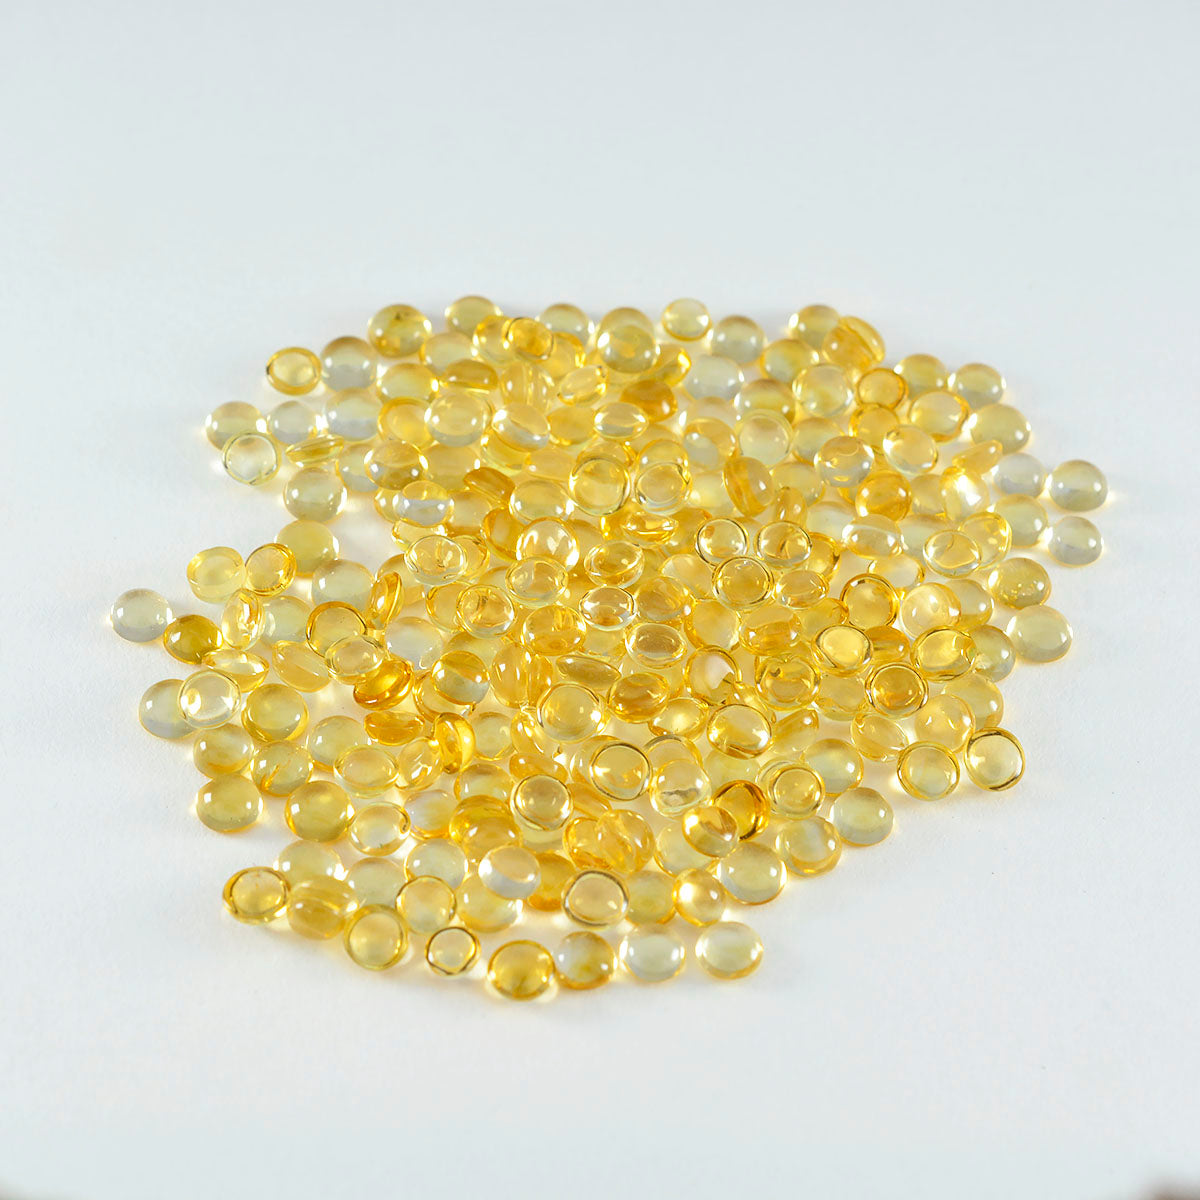 Riyogems 1PC gele citrien cabochon 4X4 mm ronde vorm, geweldige kwaliteit edelsteen